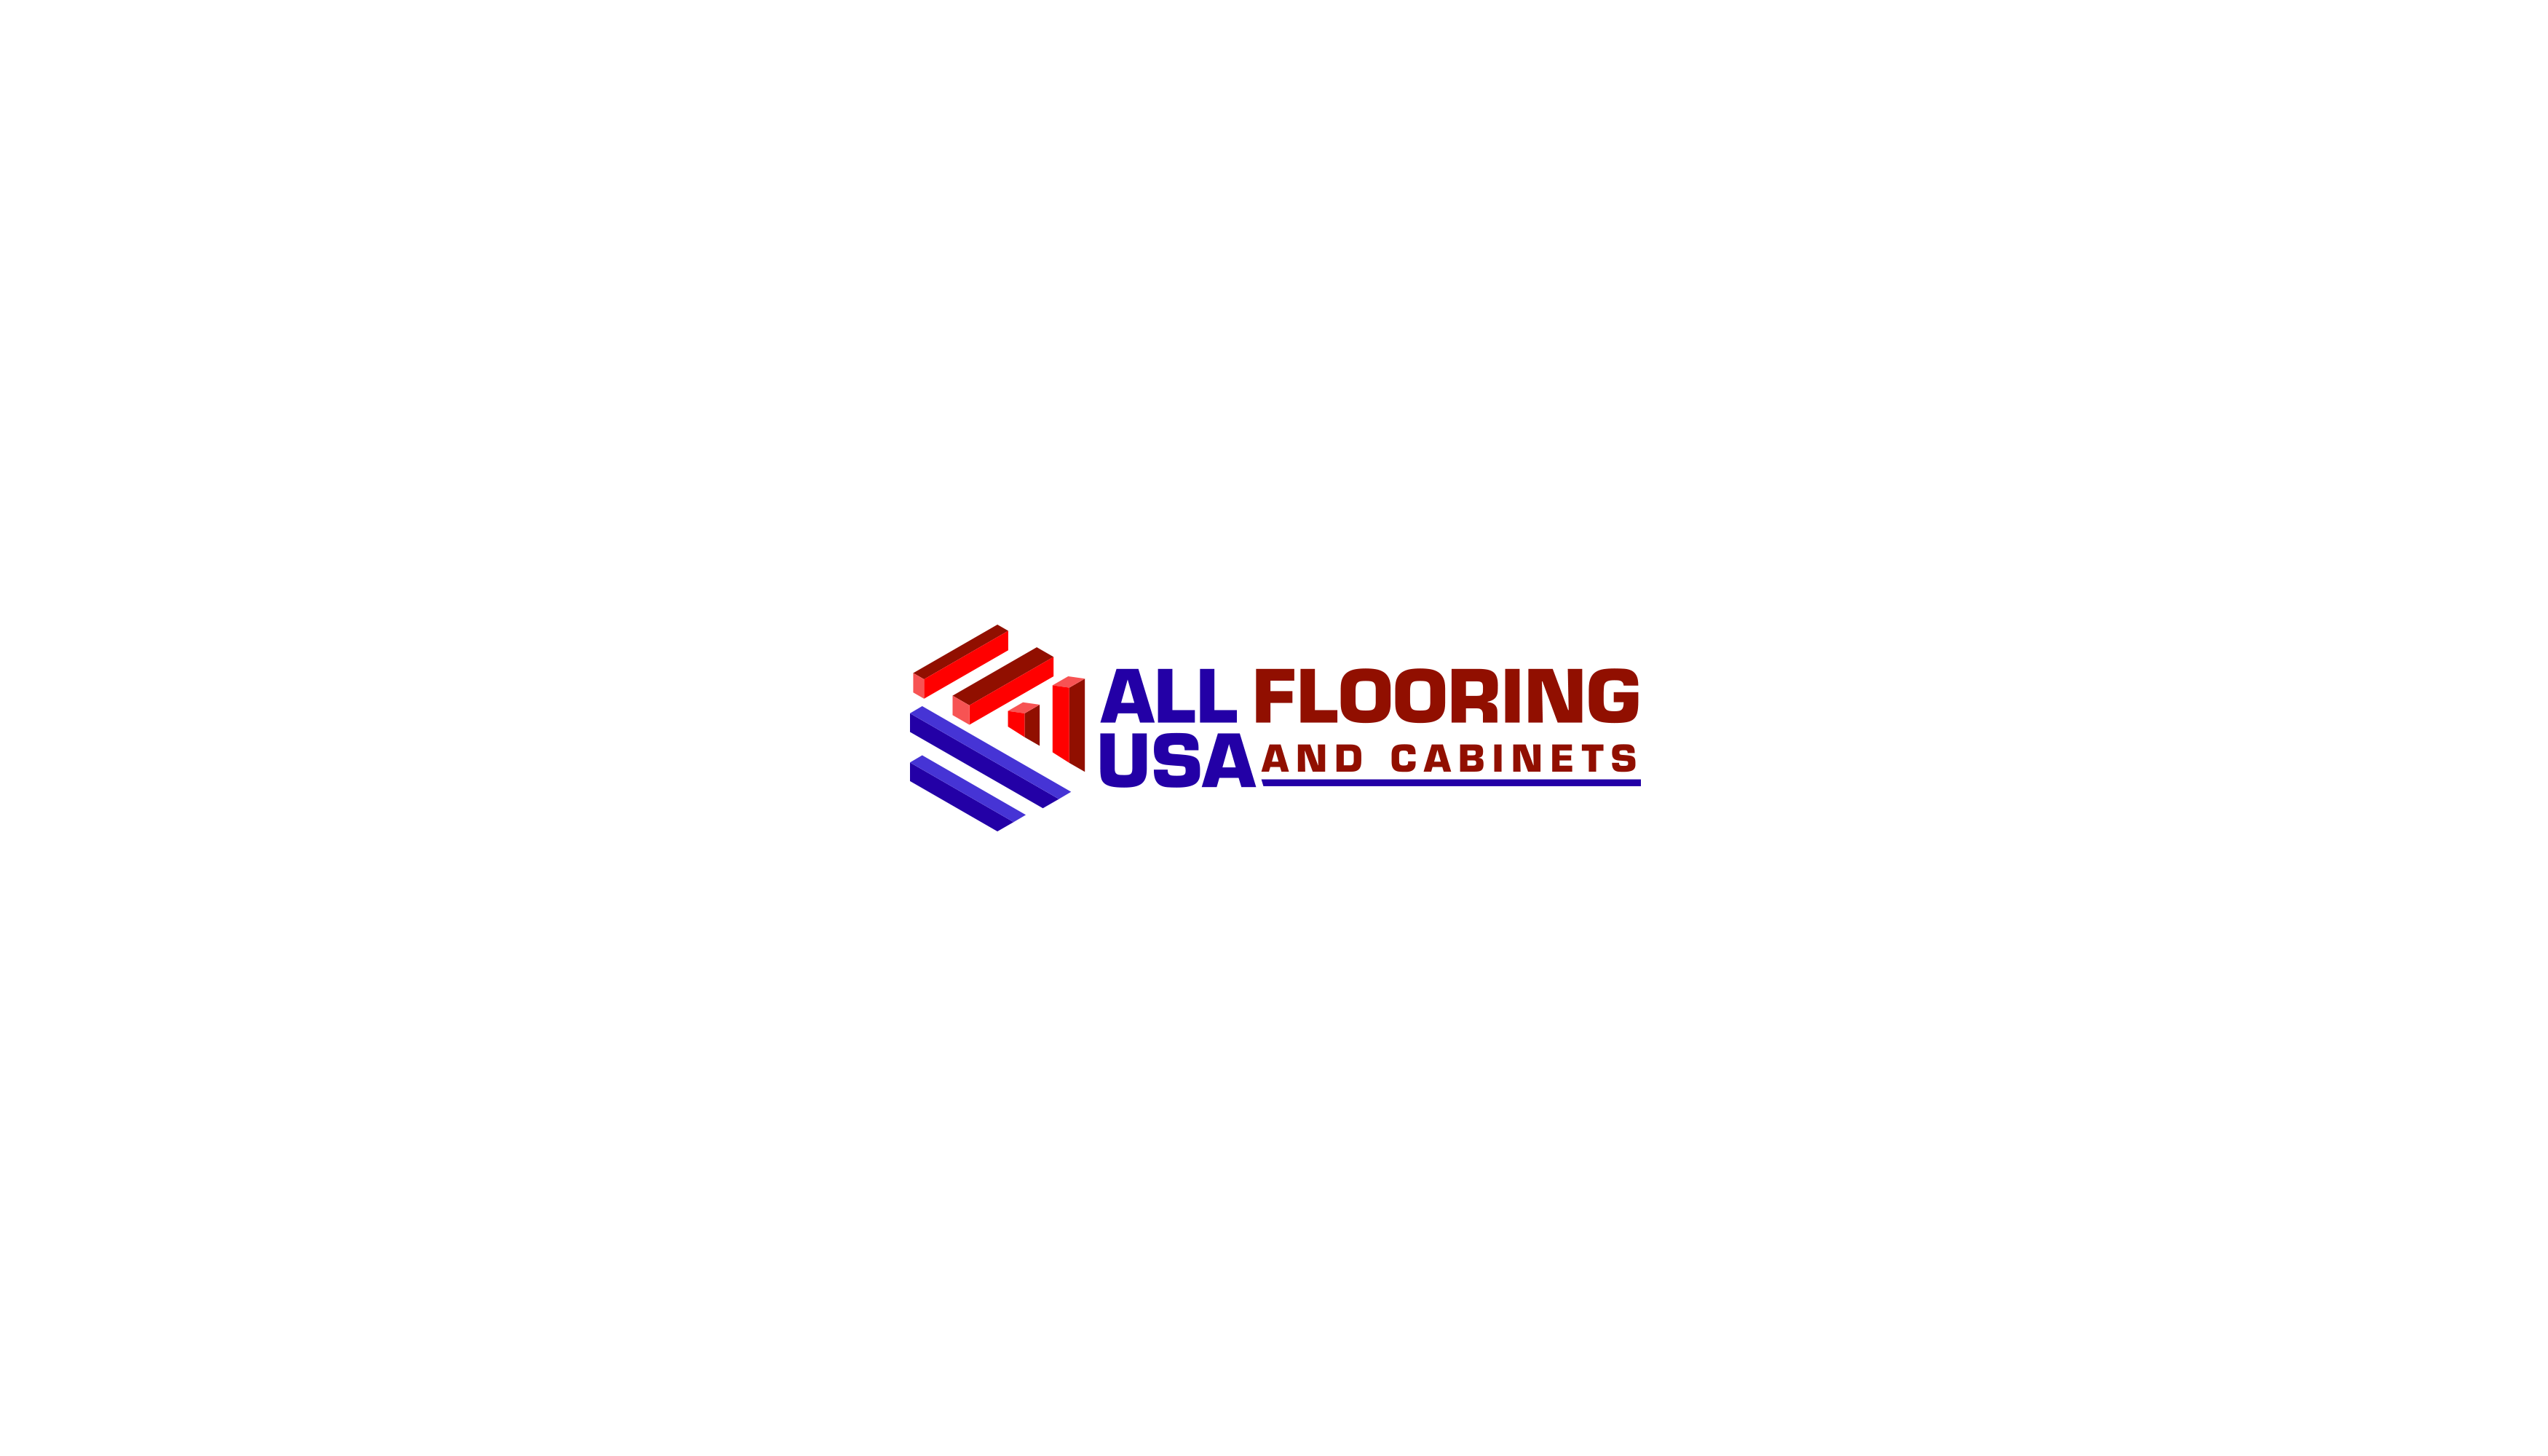 All Flooring USA & Cabinets Design #1